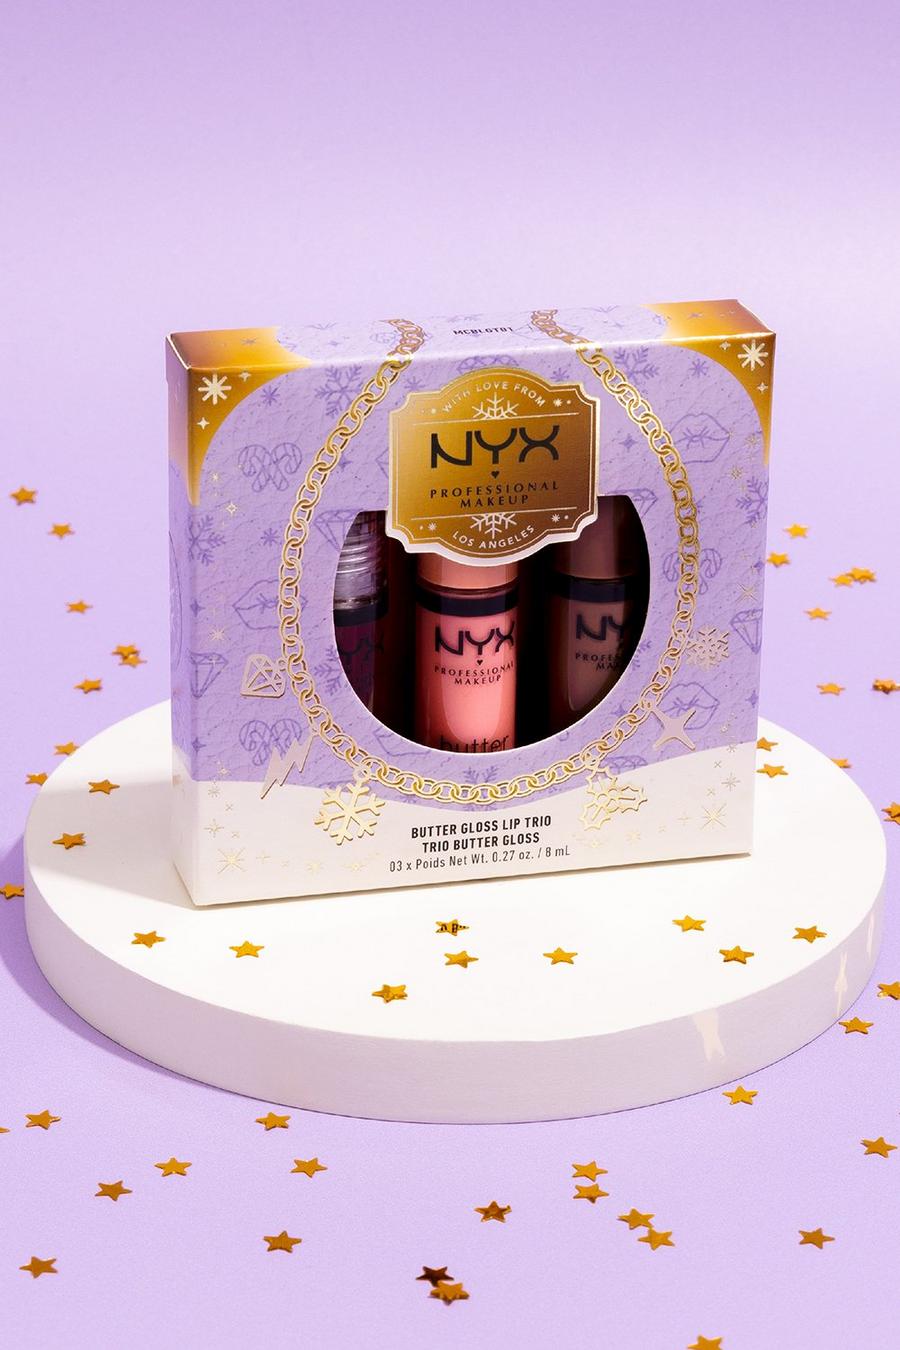 Black nero NYX Professional Makeup Butter Gloss Trio Gift Set